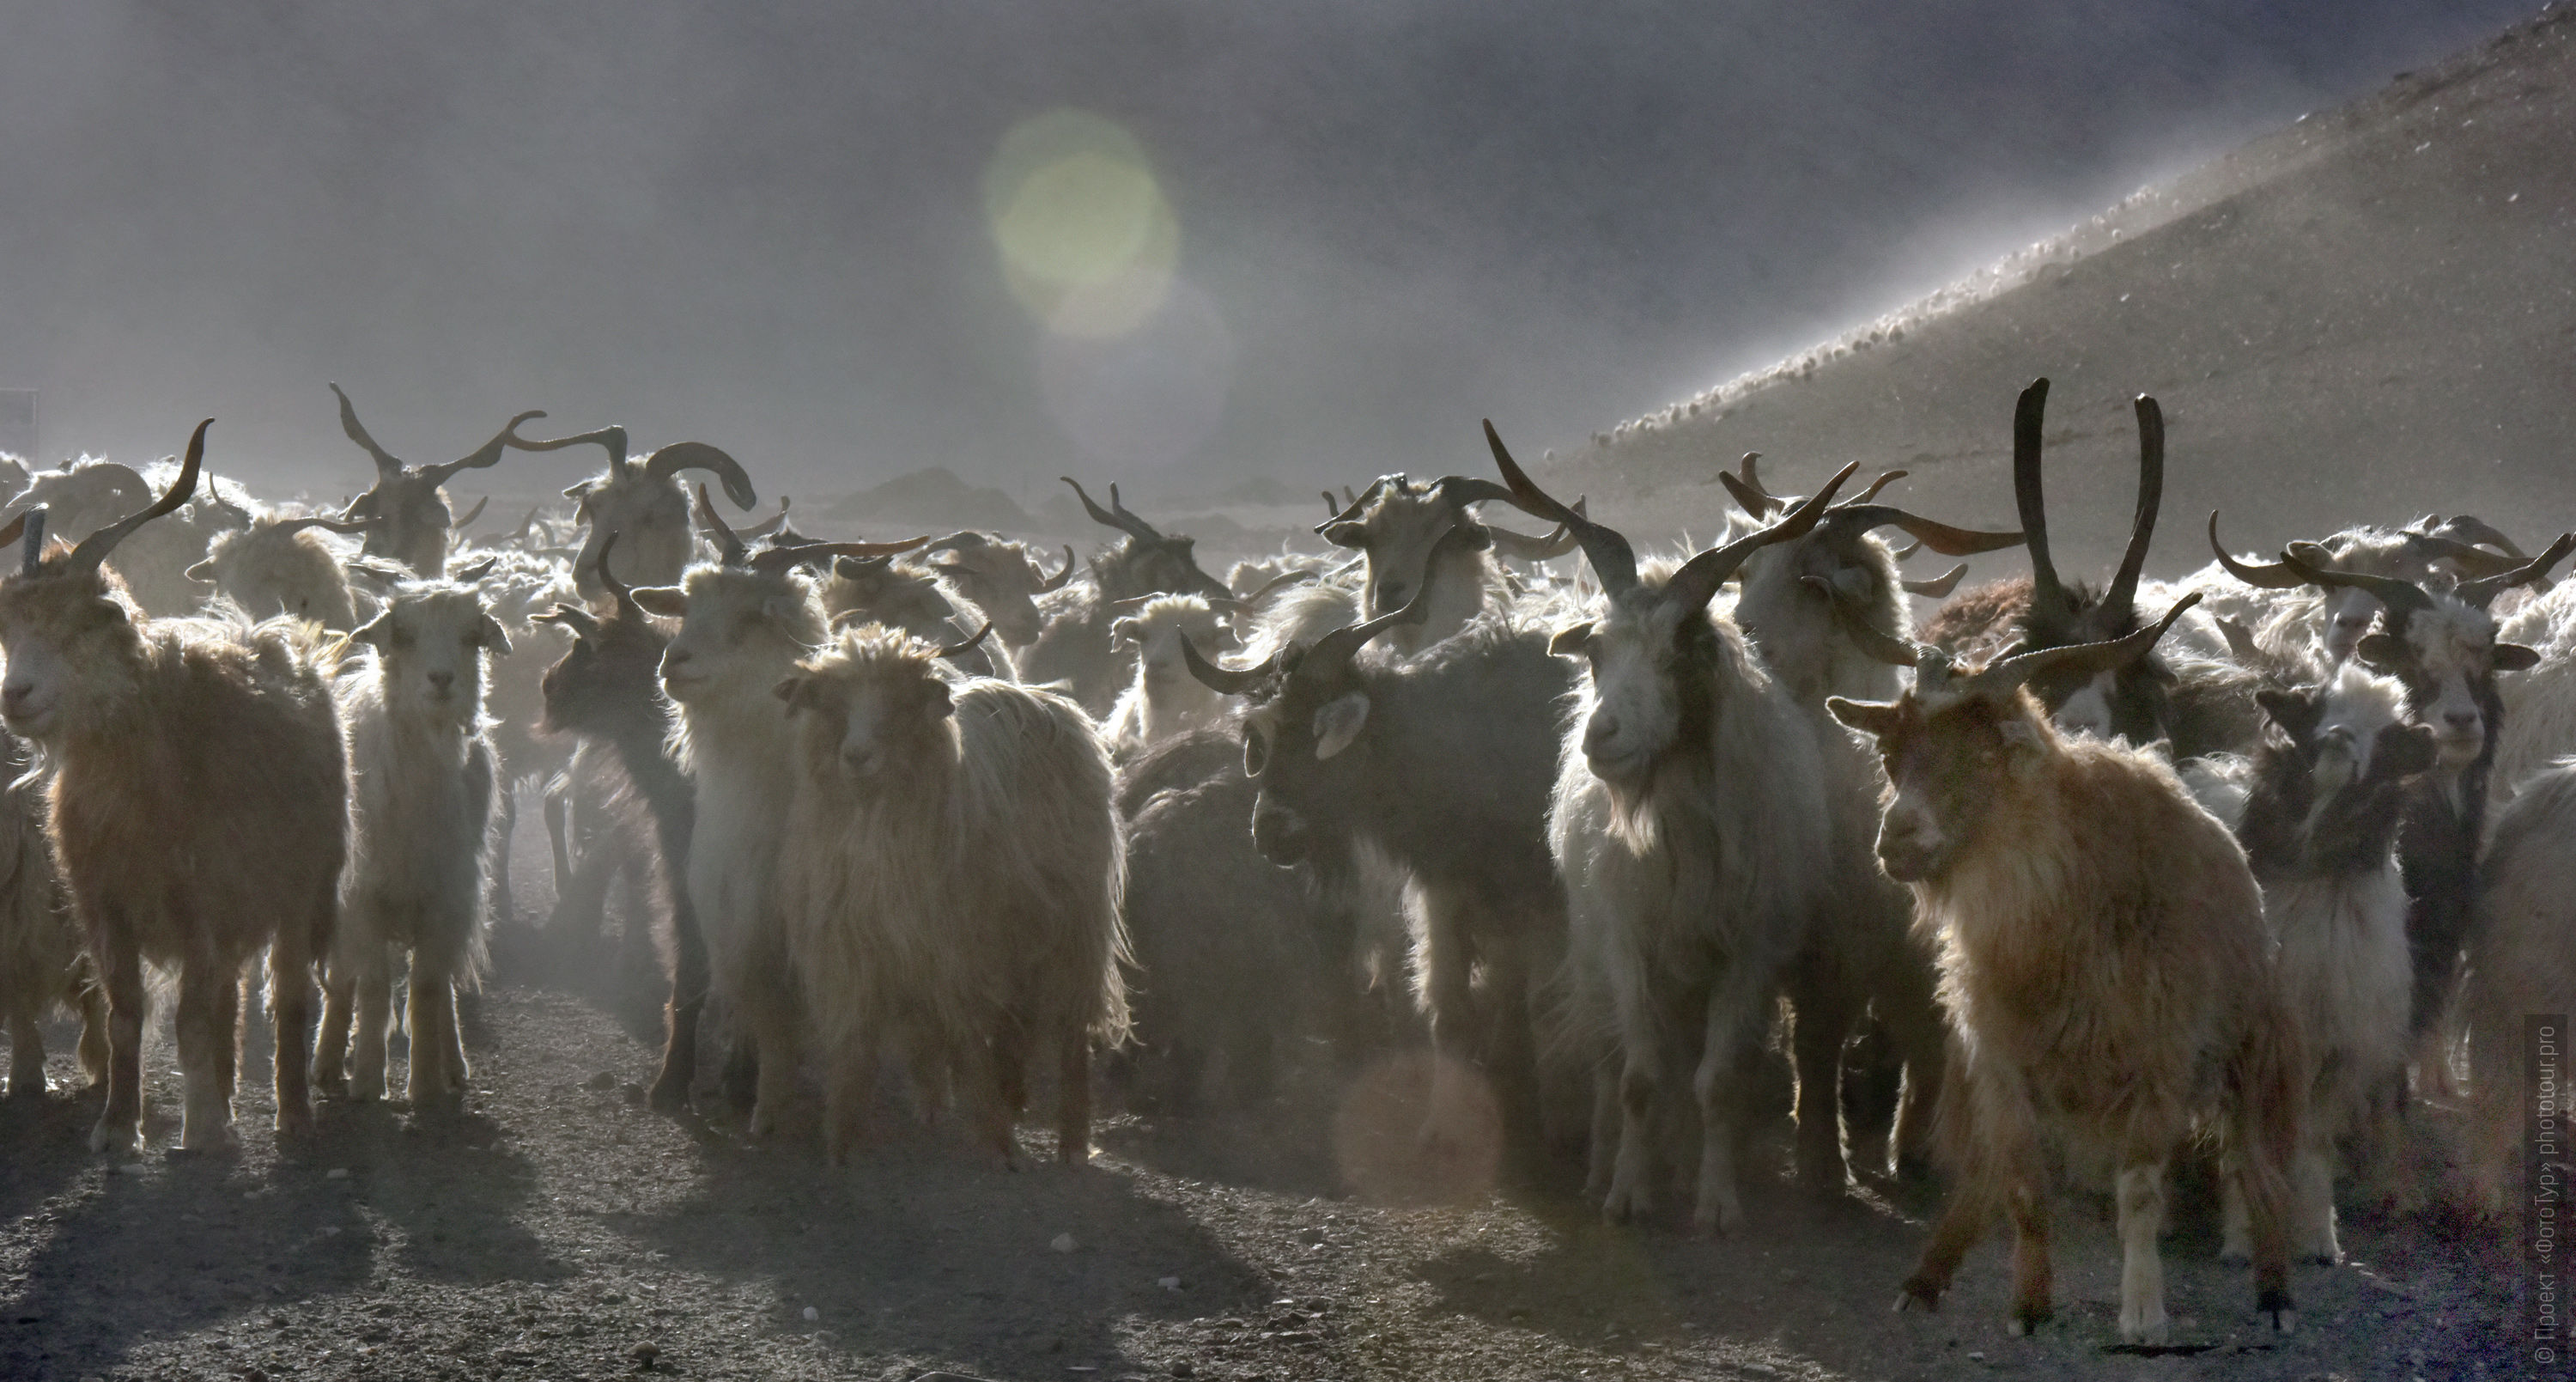 Ladakh goats and sheep, Ladakh womens tour, August 31 - September 14, 2019.